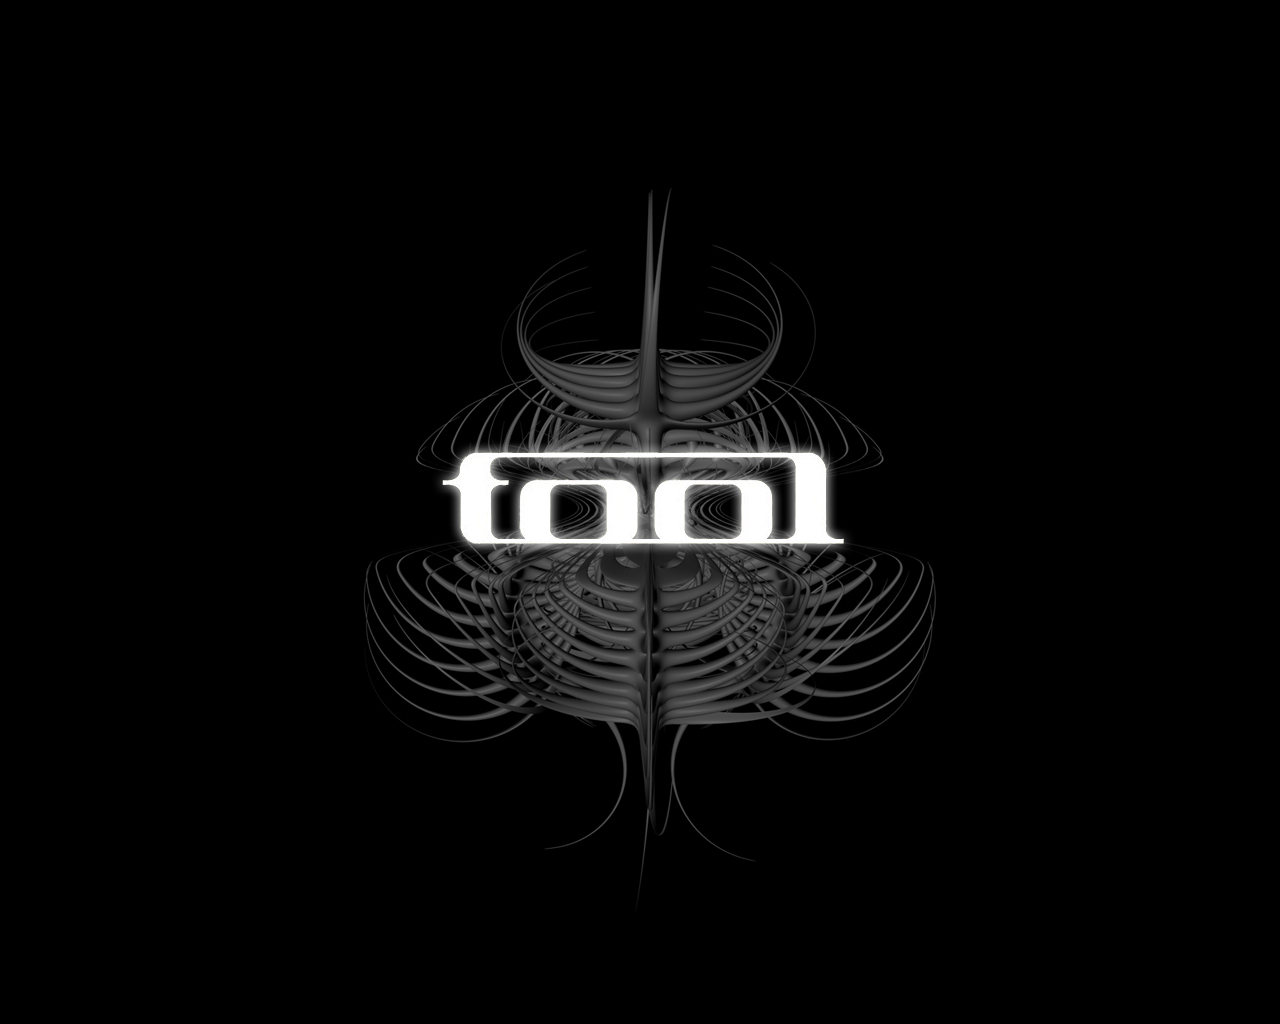 Tool - Tool Wallpaper 10572349 - Fanpop